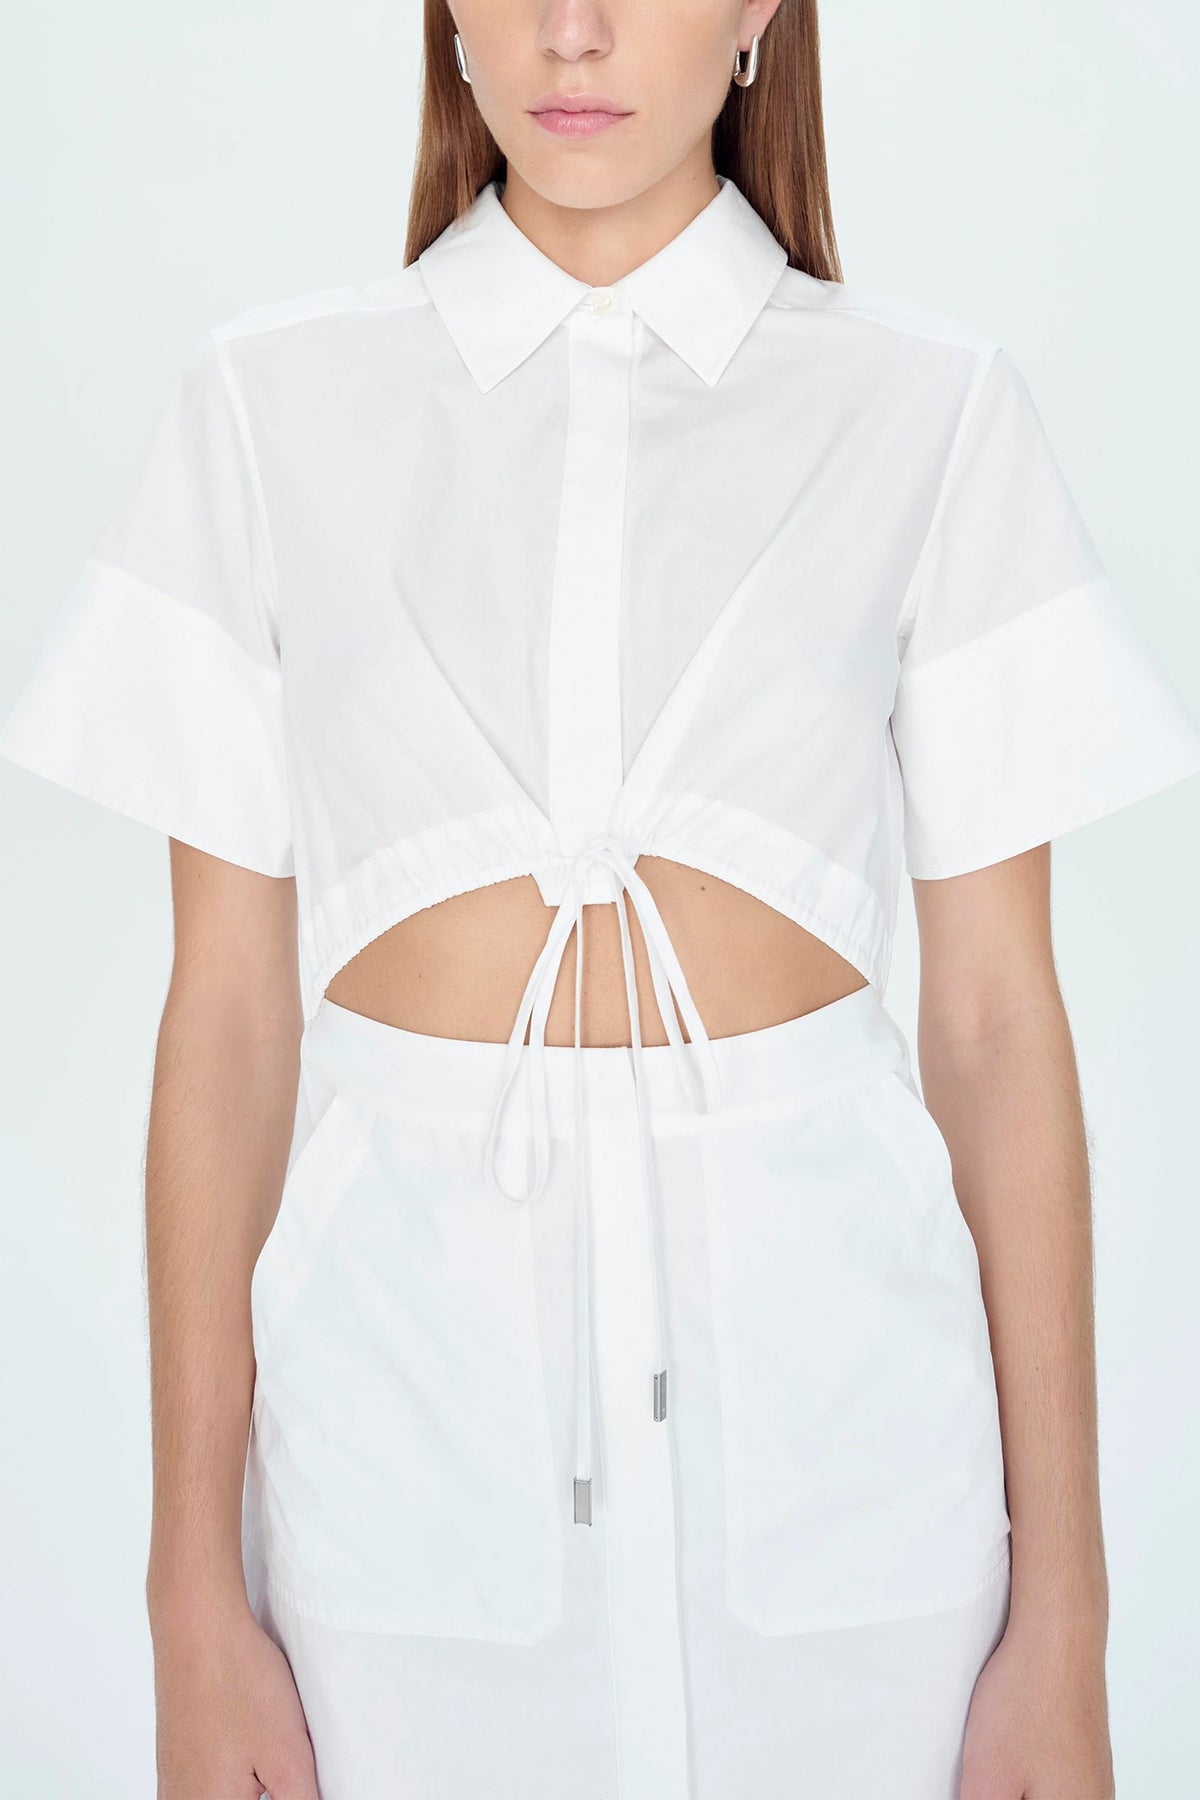 Marcy Mini Dress in White - shop-olivia.com